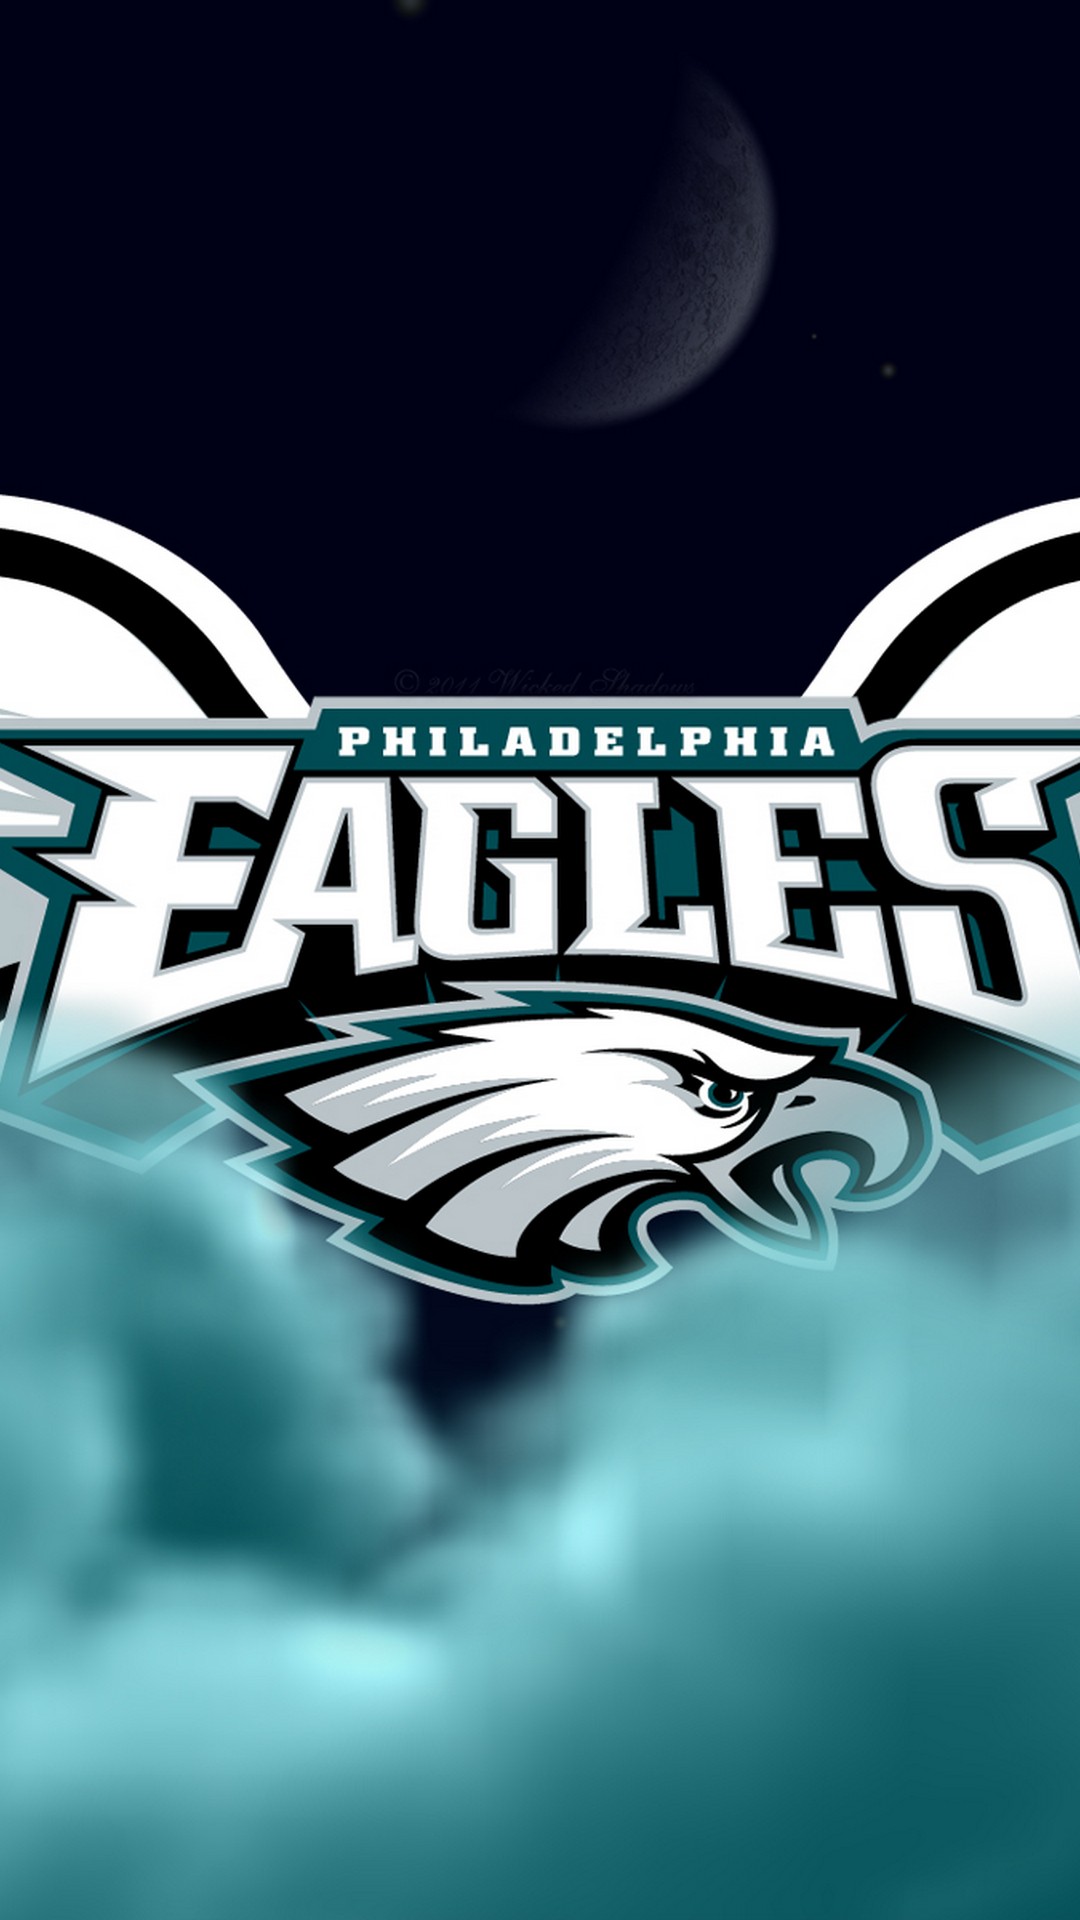 Philadelphia Eagles iPhone X Wallpaper Nfl Football